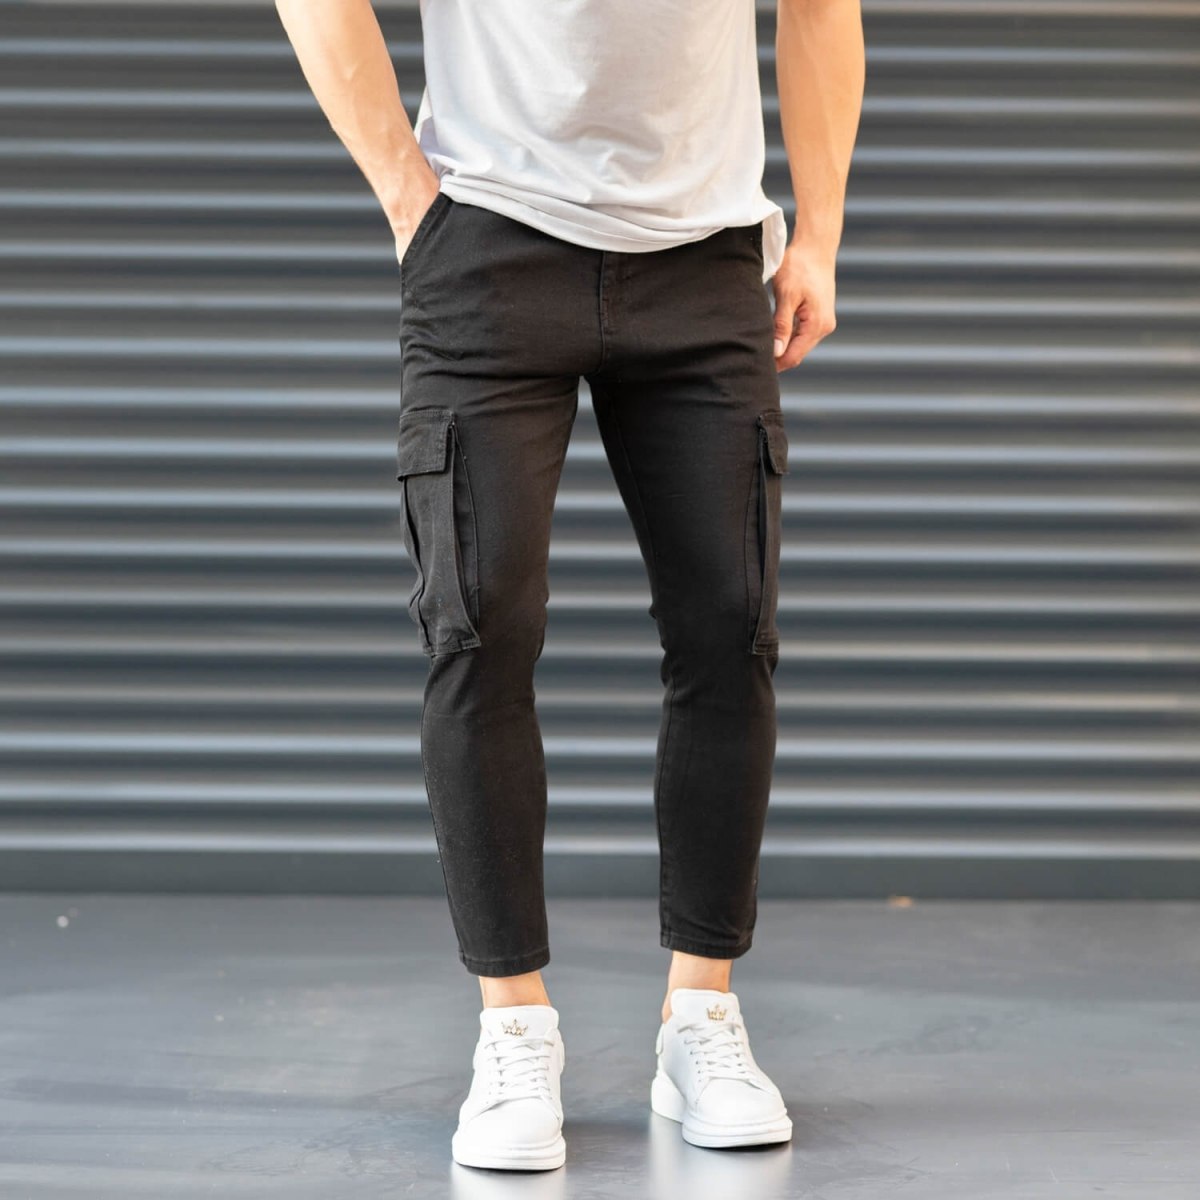 Men's Pocket Style Jeans in Black - 2